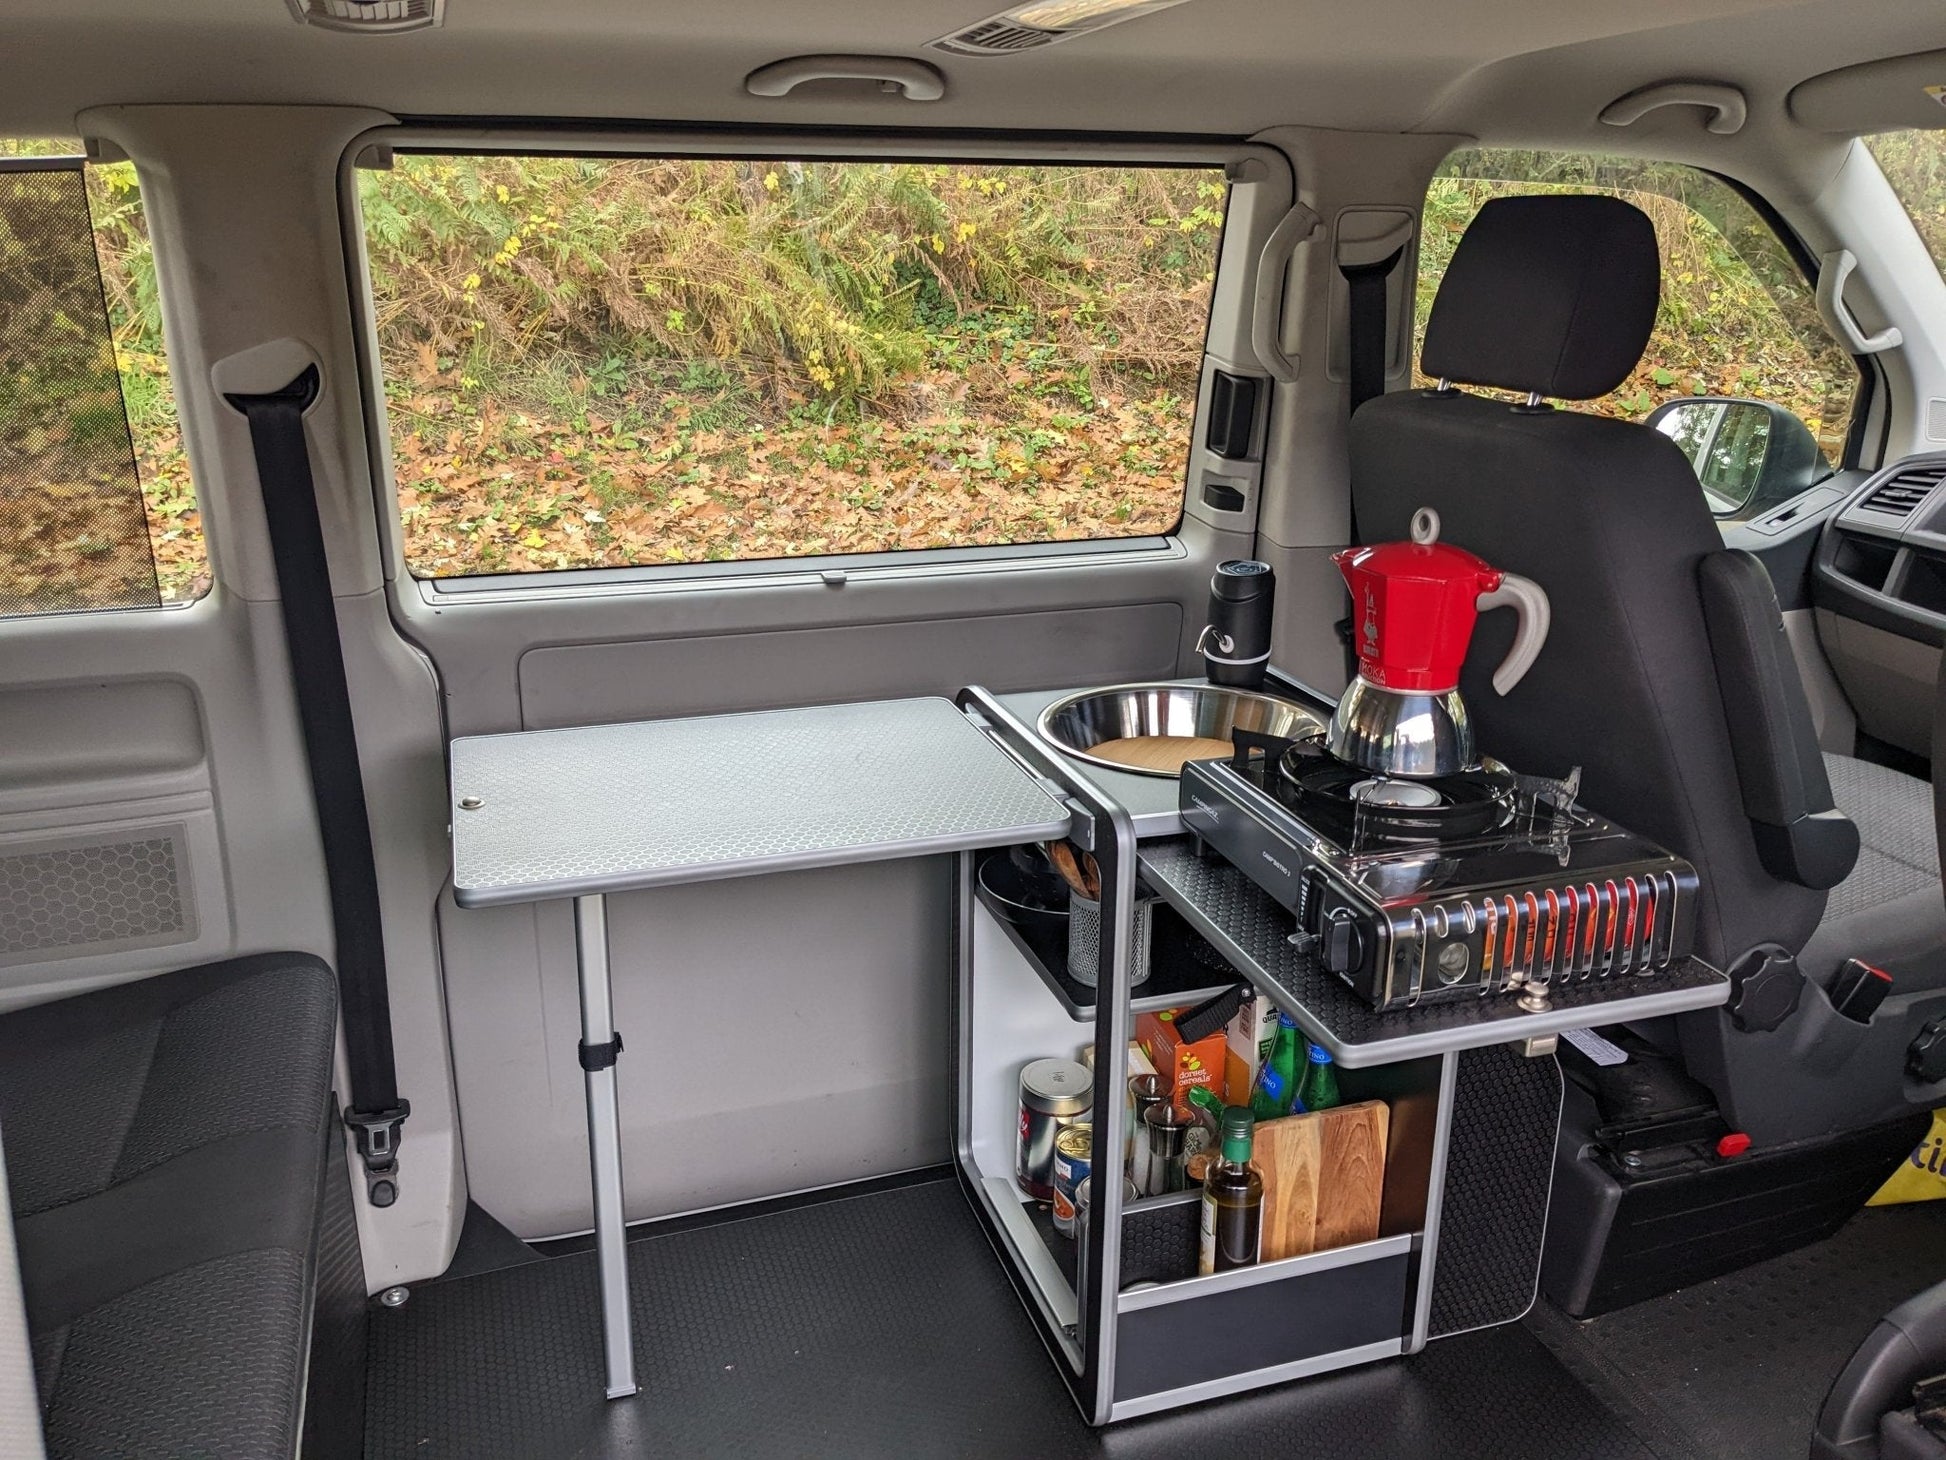 Vangear Mini-Pod Campervan Kitchen Pod (Black) gen2.1 - Vangear UK